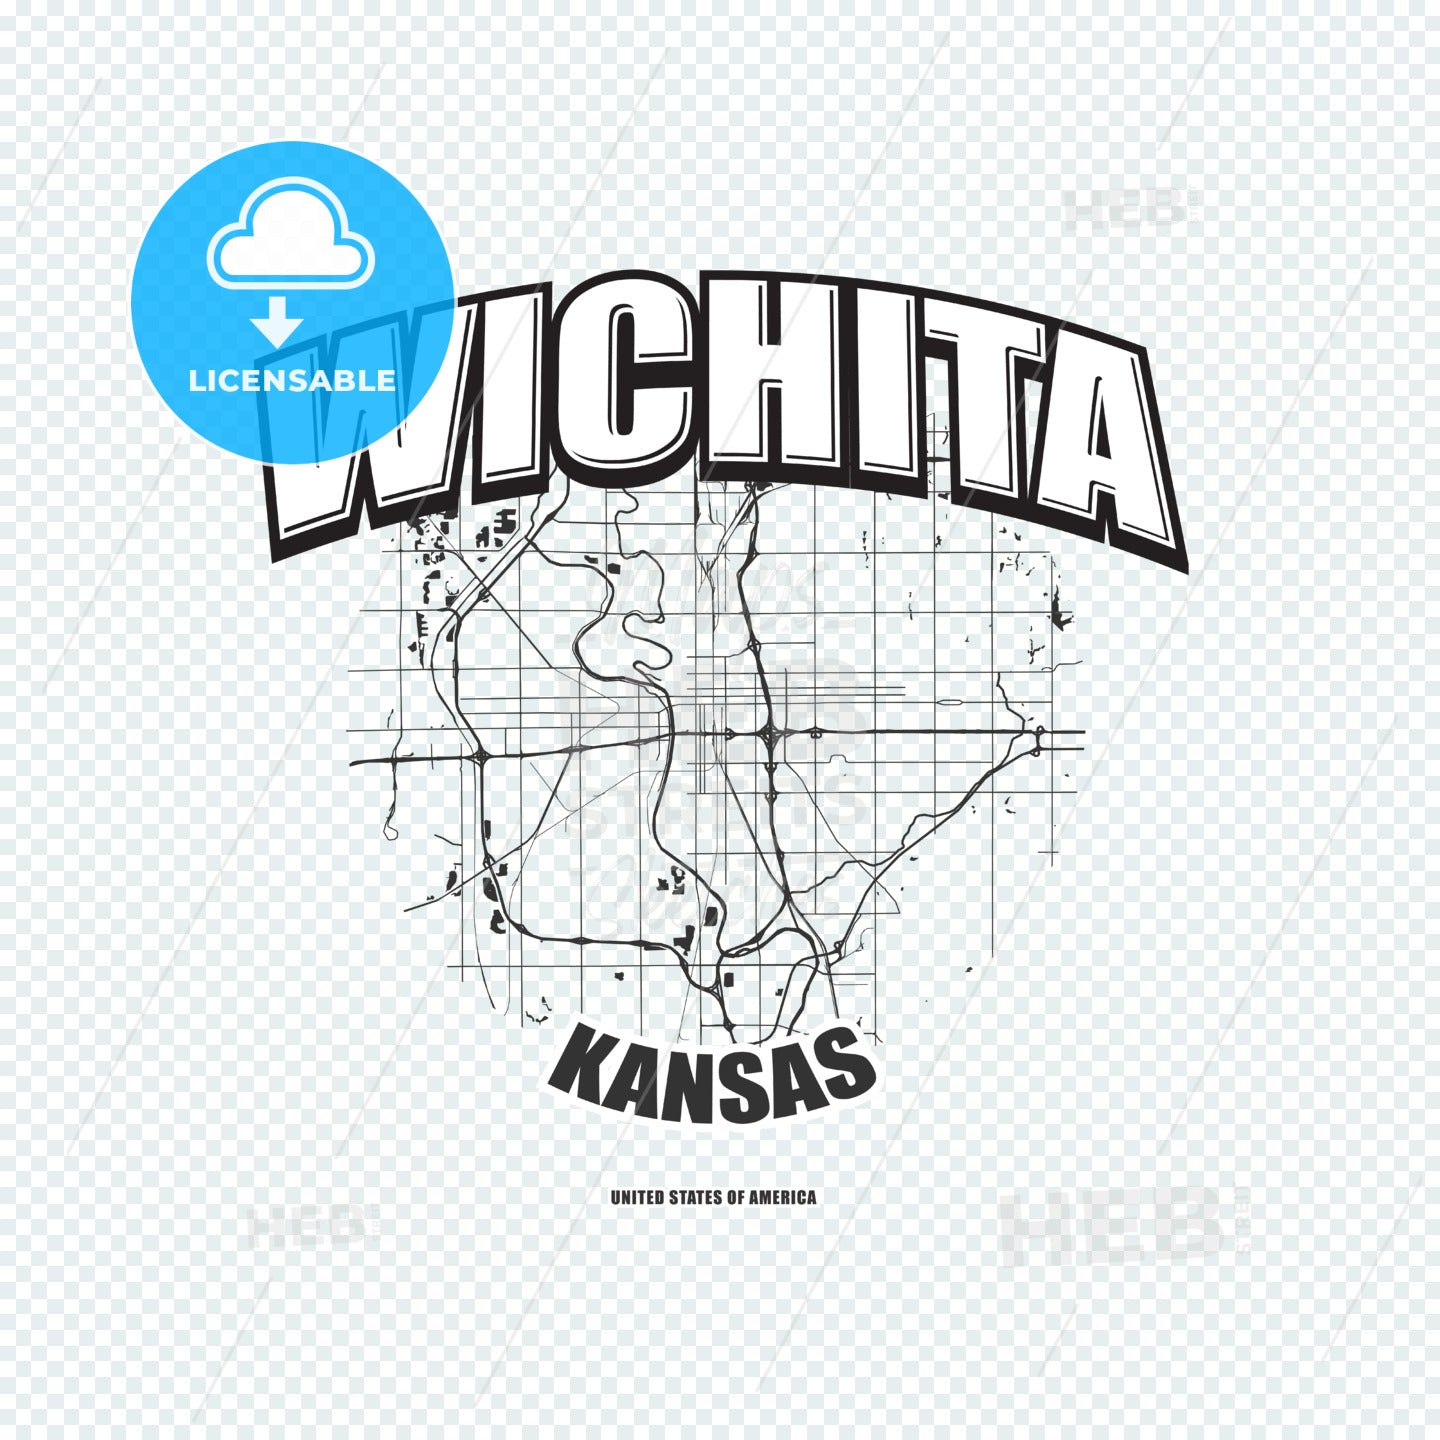 Wichita, Kansas, logo artwork – instant download